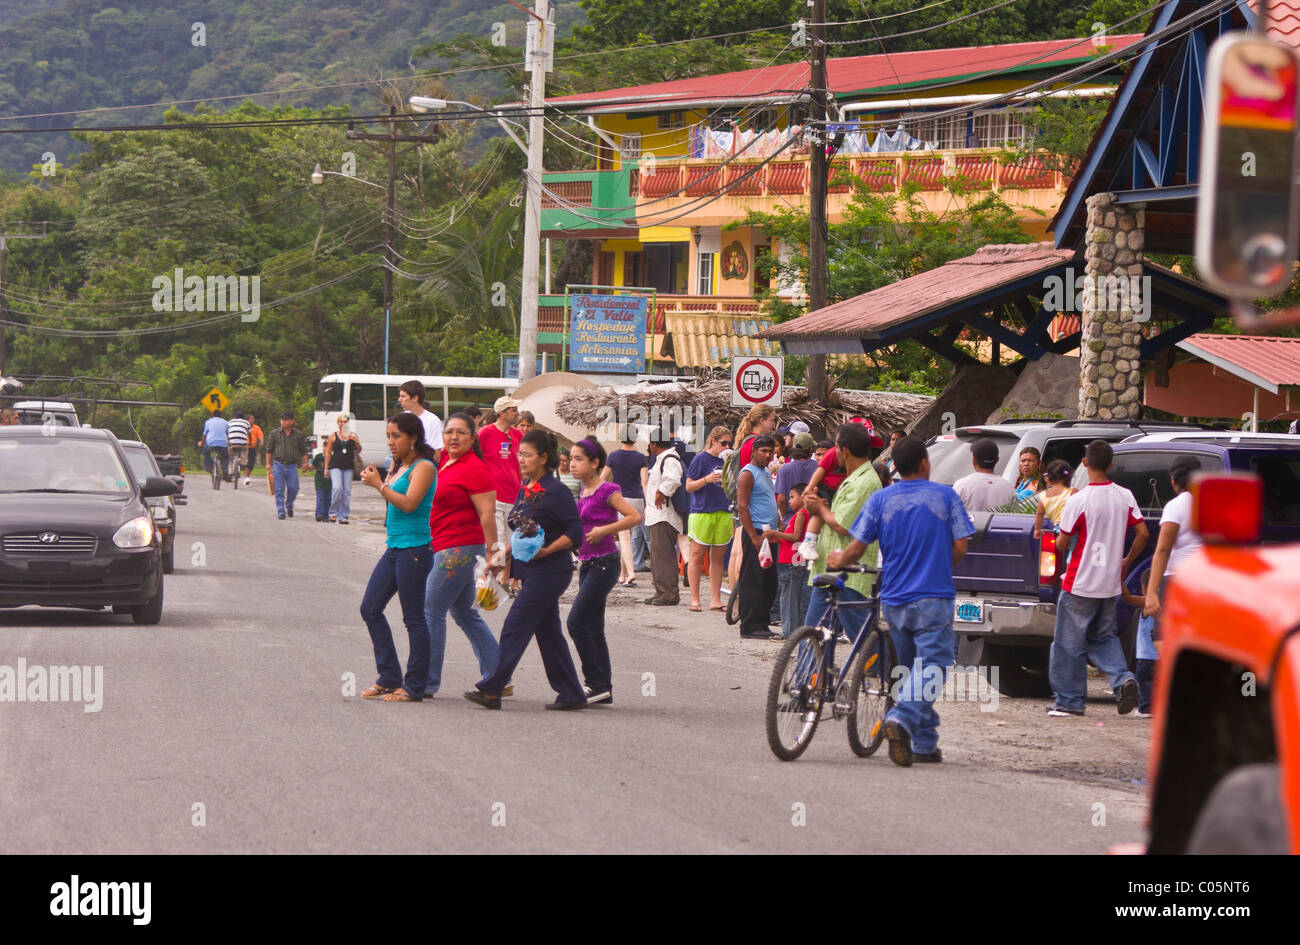 EL VALLE de ANTON, PANAMA - People crossing street in town. Stock Photo